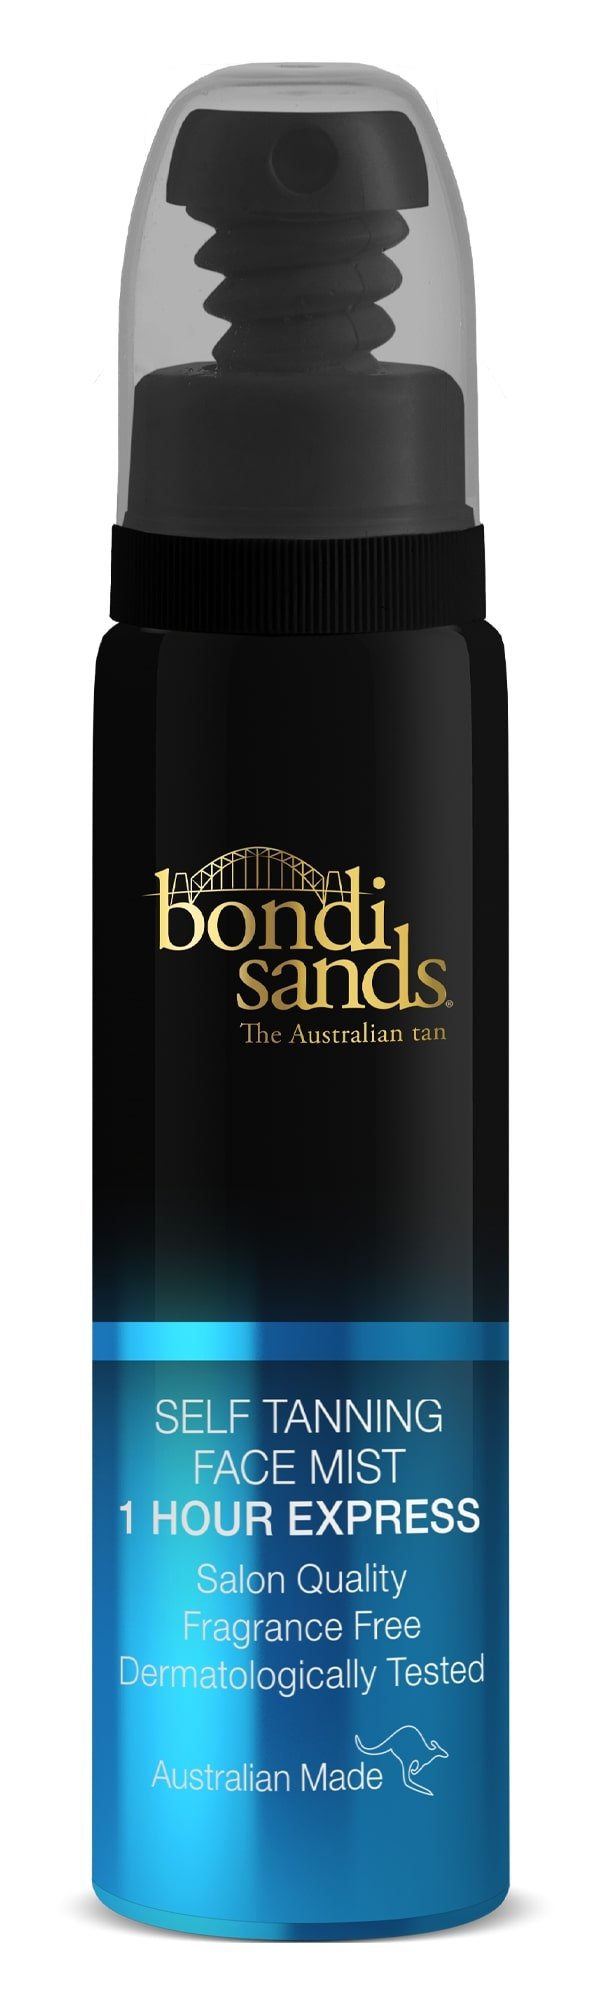 Bondi Sands Self Tanning Face Mist 1 Hour Express 70 ml